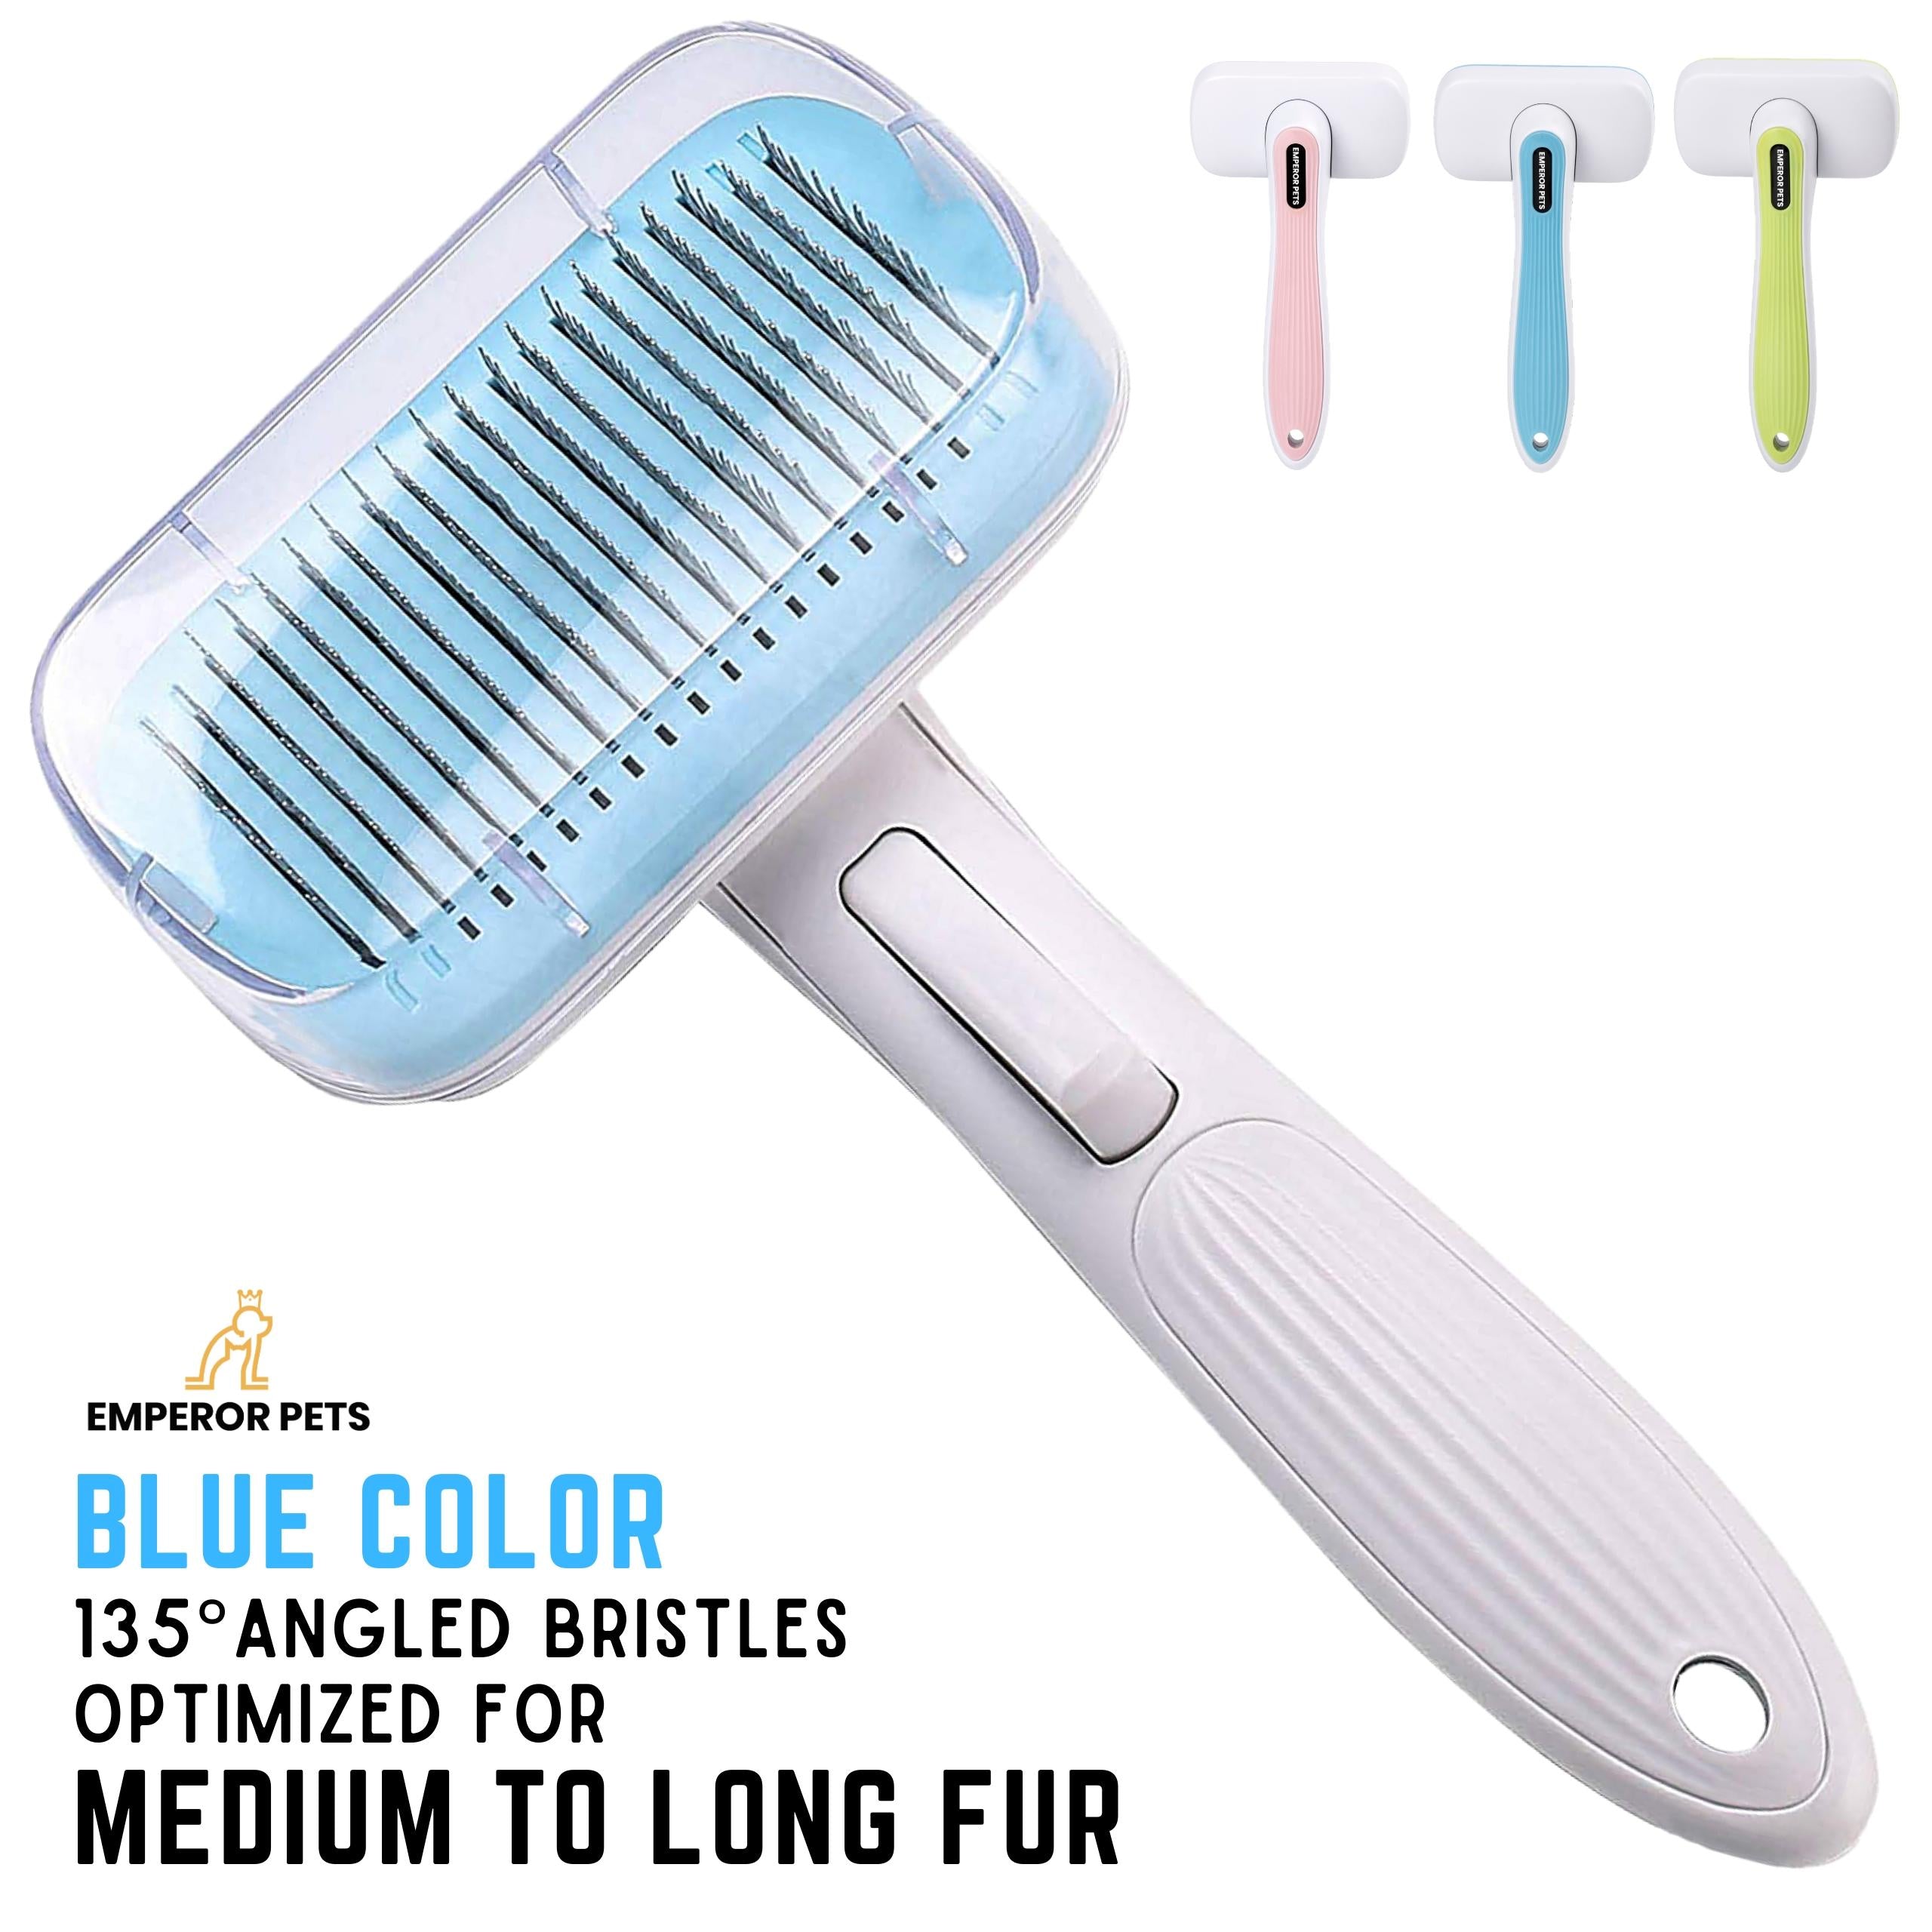 Emperor Pets Self Cleaning Pet Fur Slicker Brush for Long Fur Pets, Dog Brush, Cat Brush, Blue Color - Image 1 Main